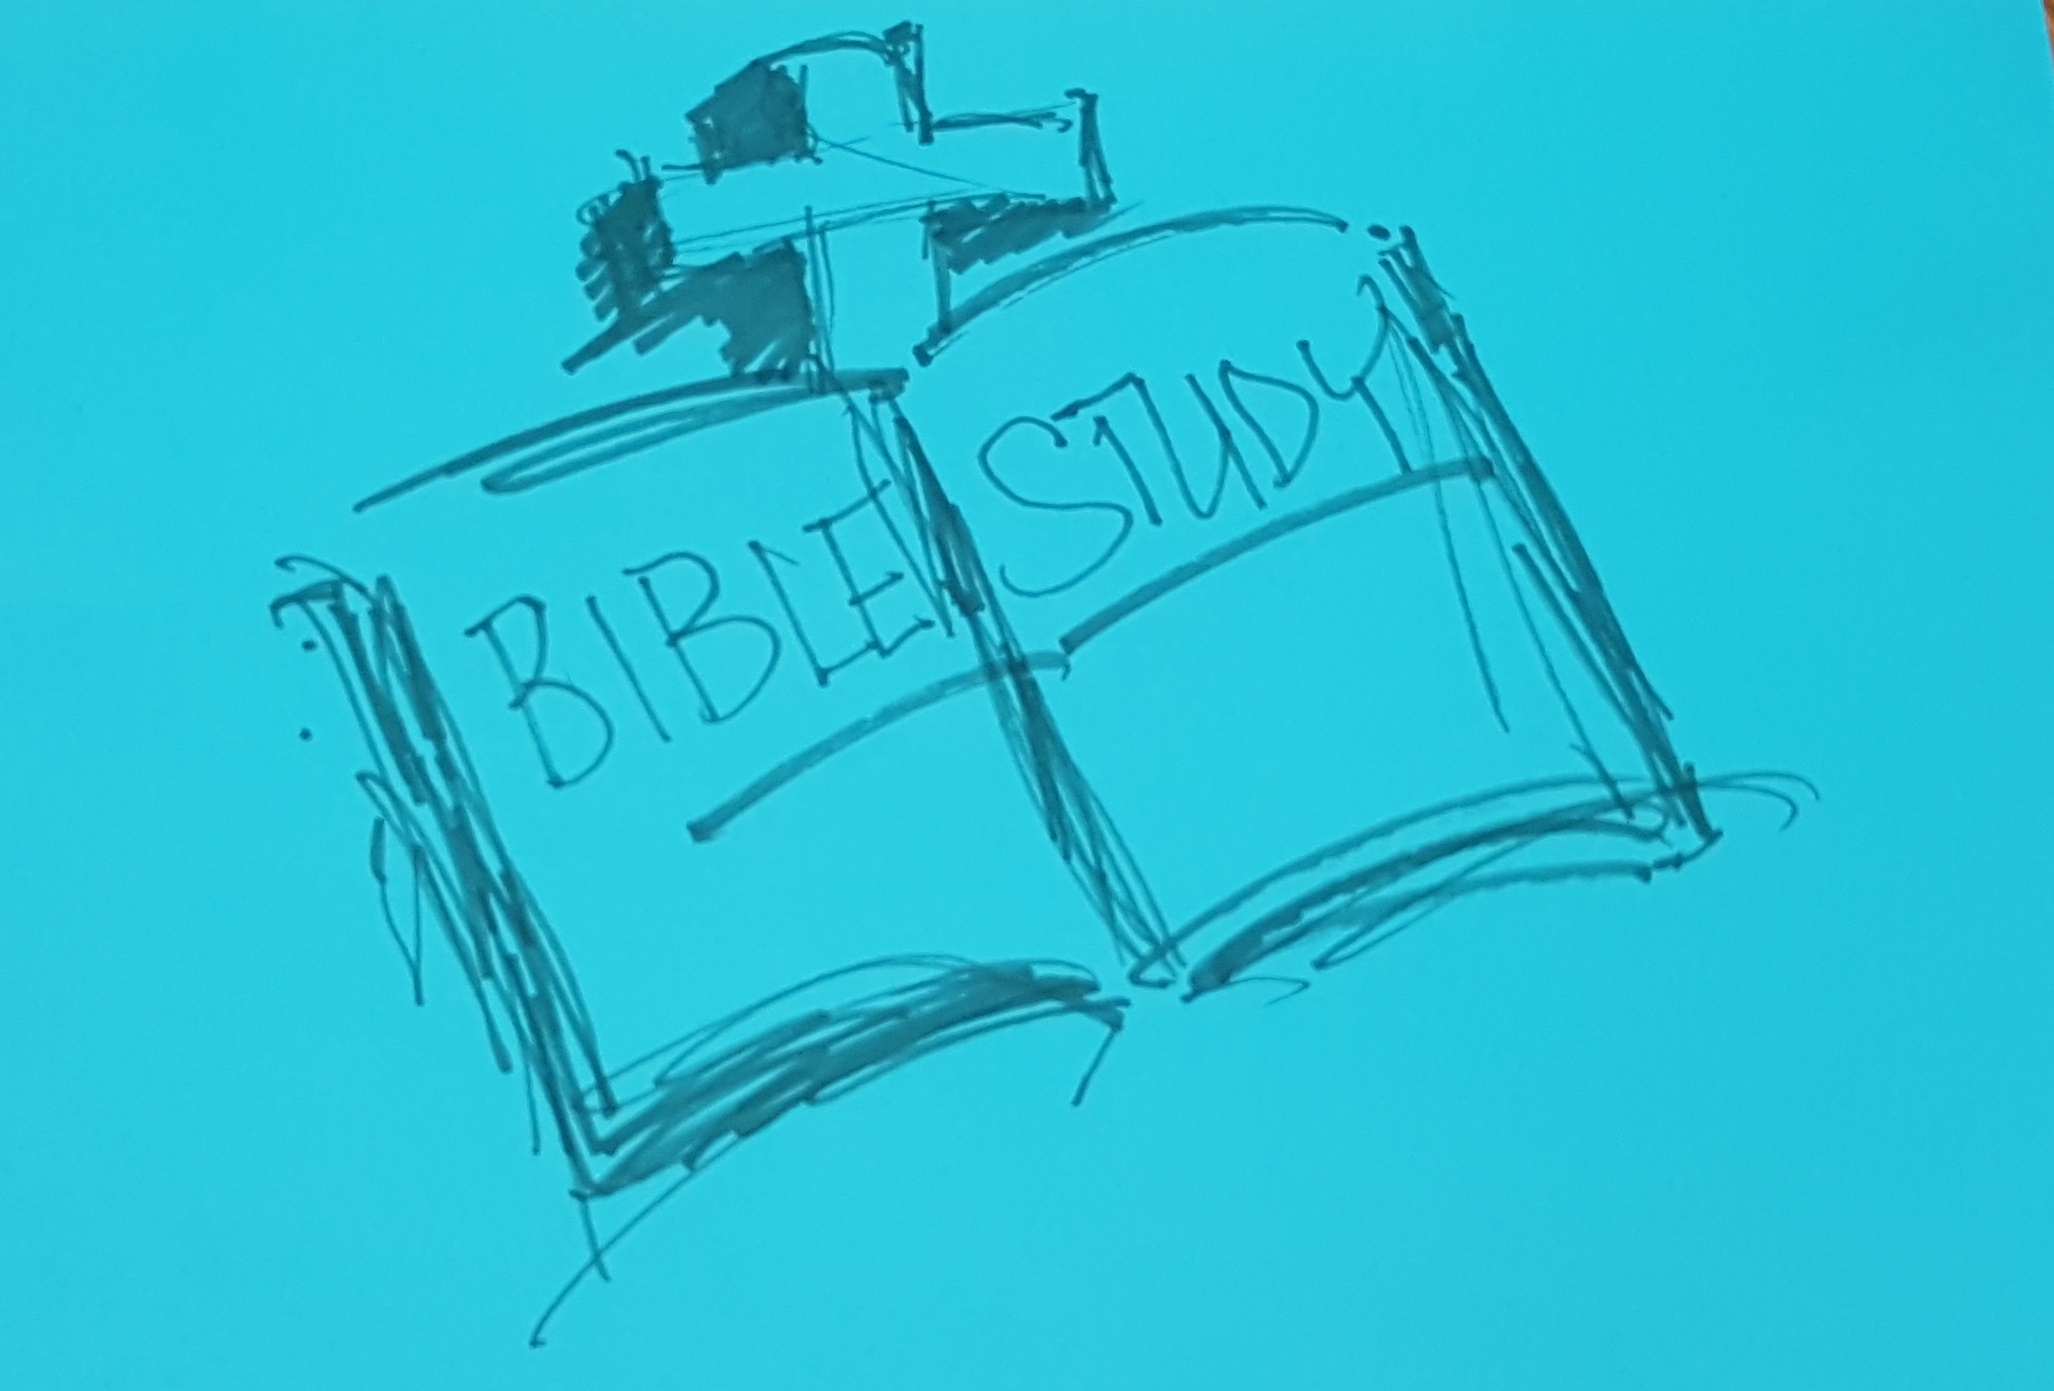 BIBLE STUDY